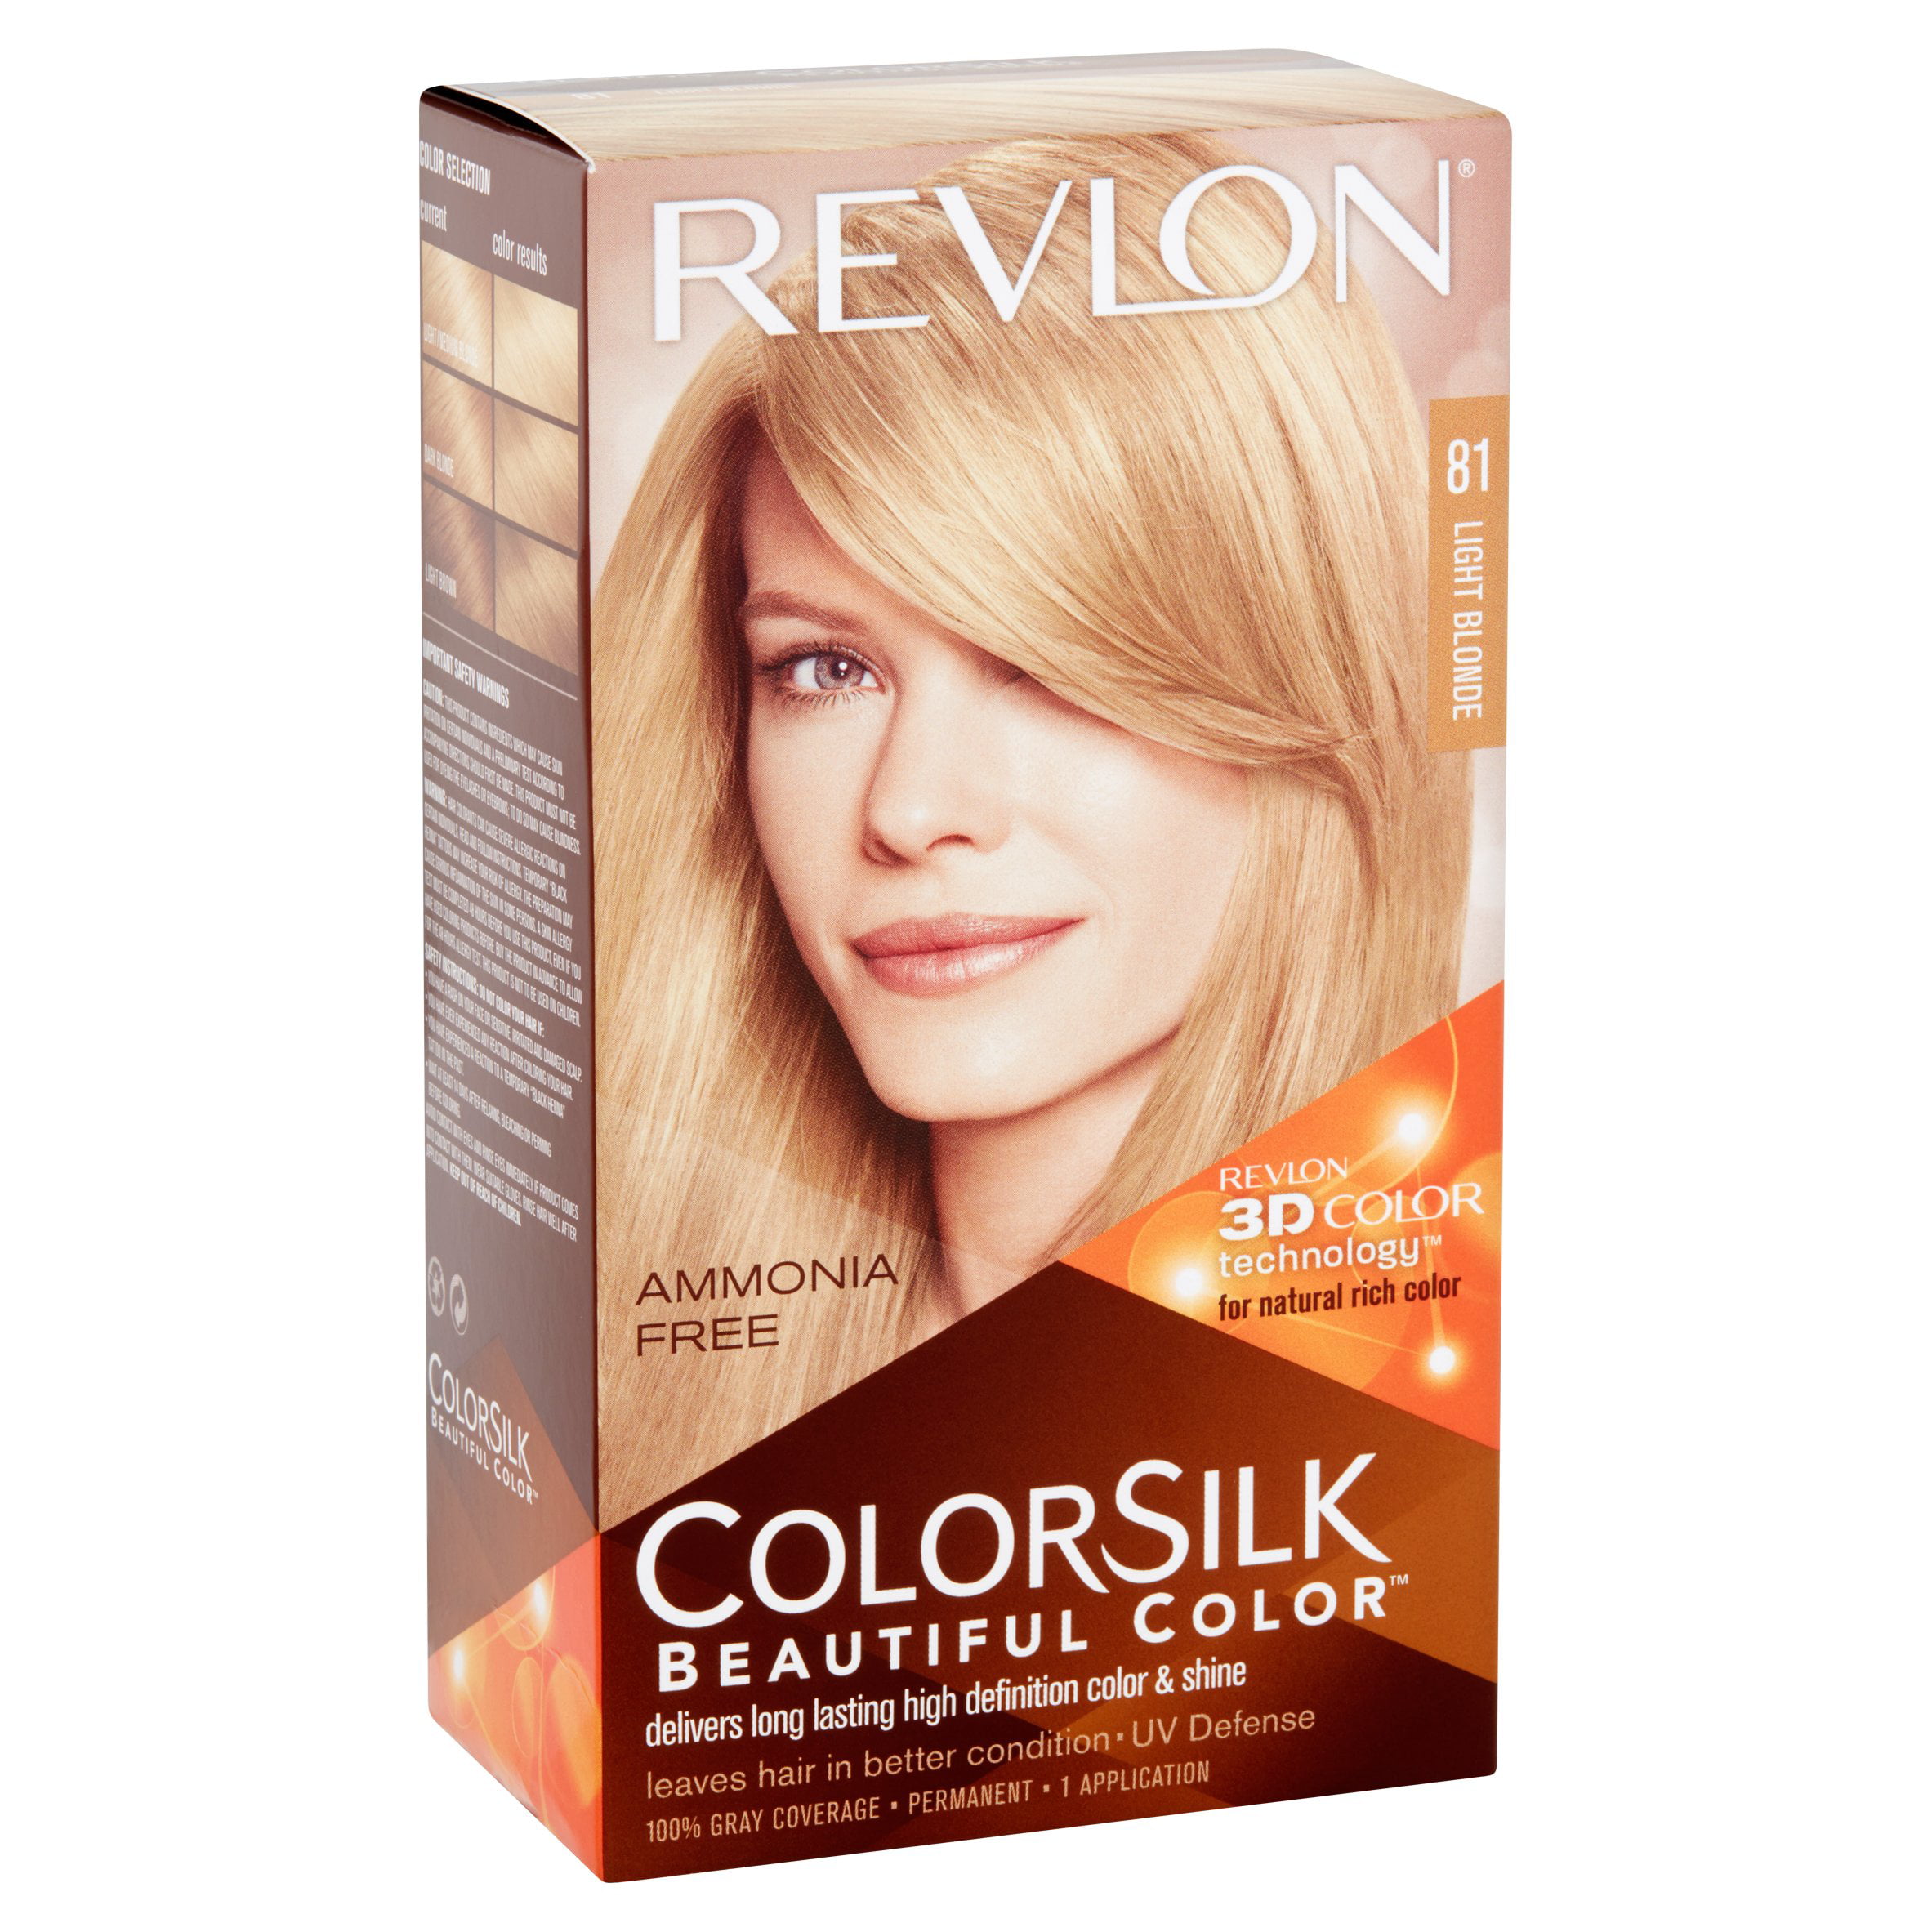 Revlon174 Colorsilk Beautiful Color8482 Permanent Liquid